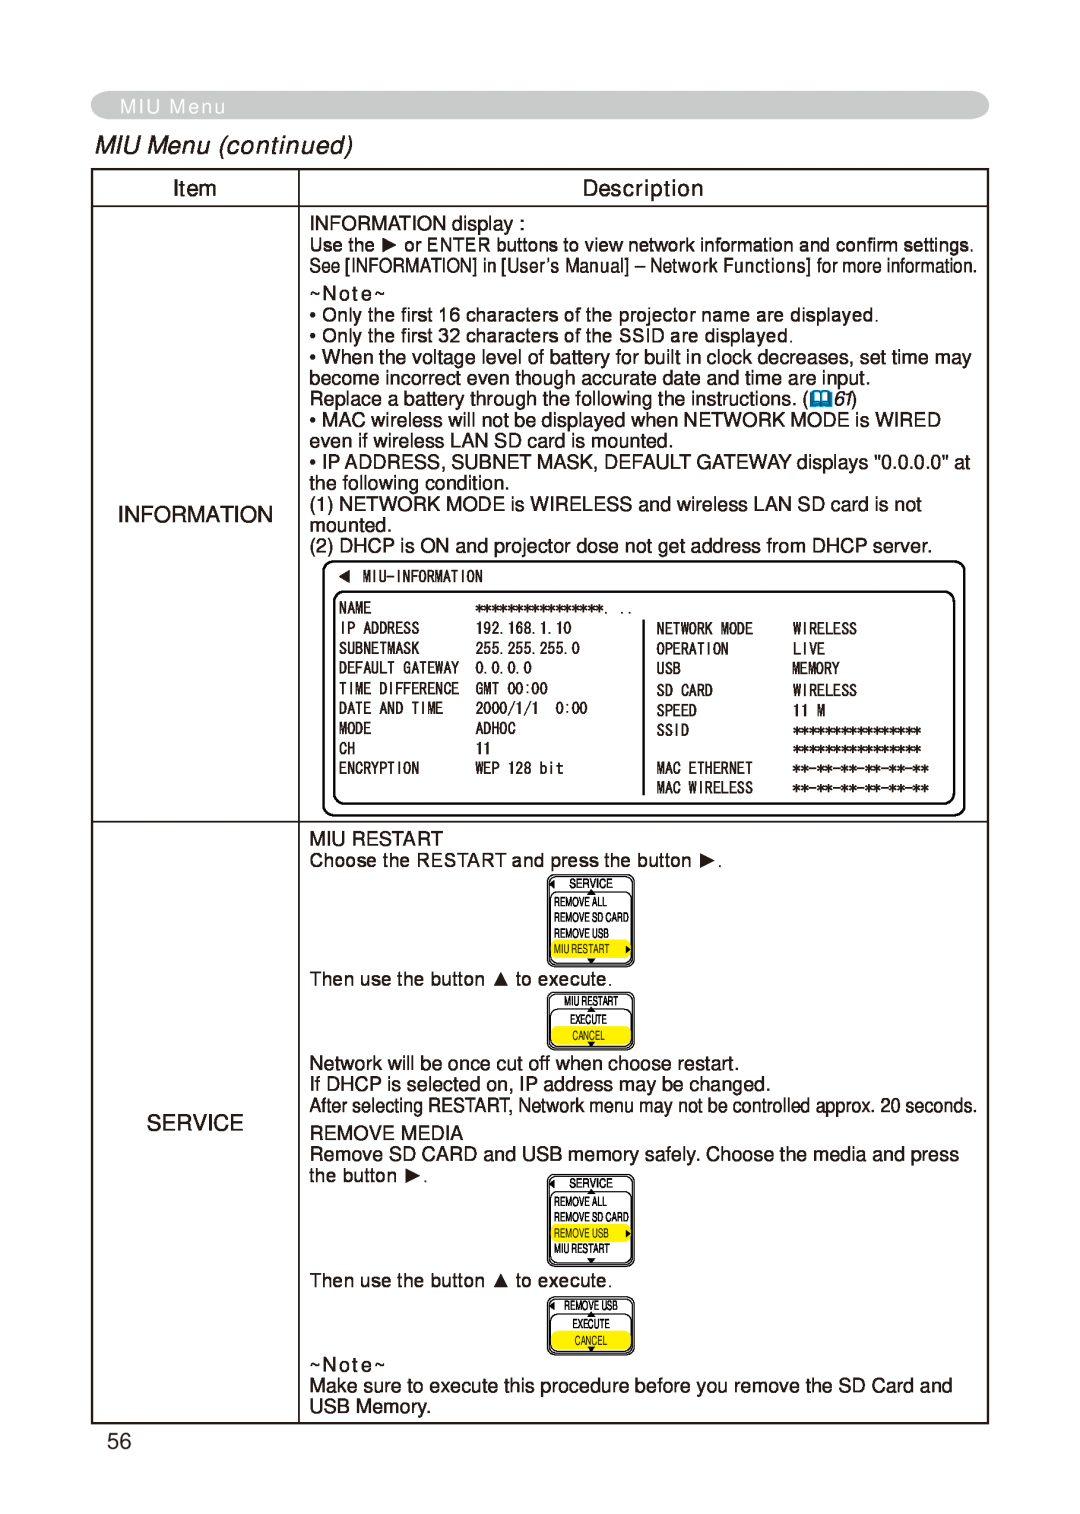 Hitachi CP-X268A user manual MIU Menu continued, Description, Information, Service, ~Note~, Miu Restart, Remove Media 